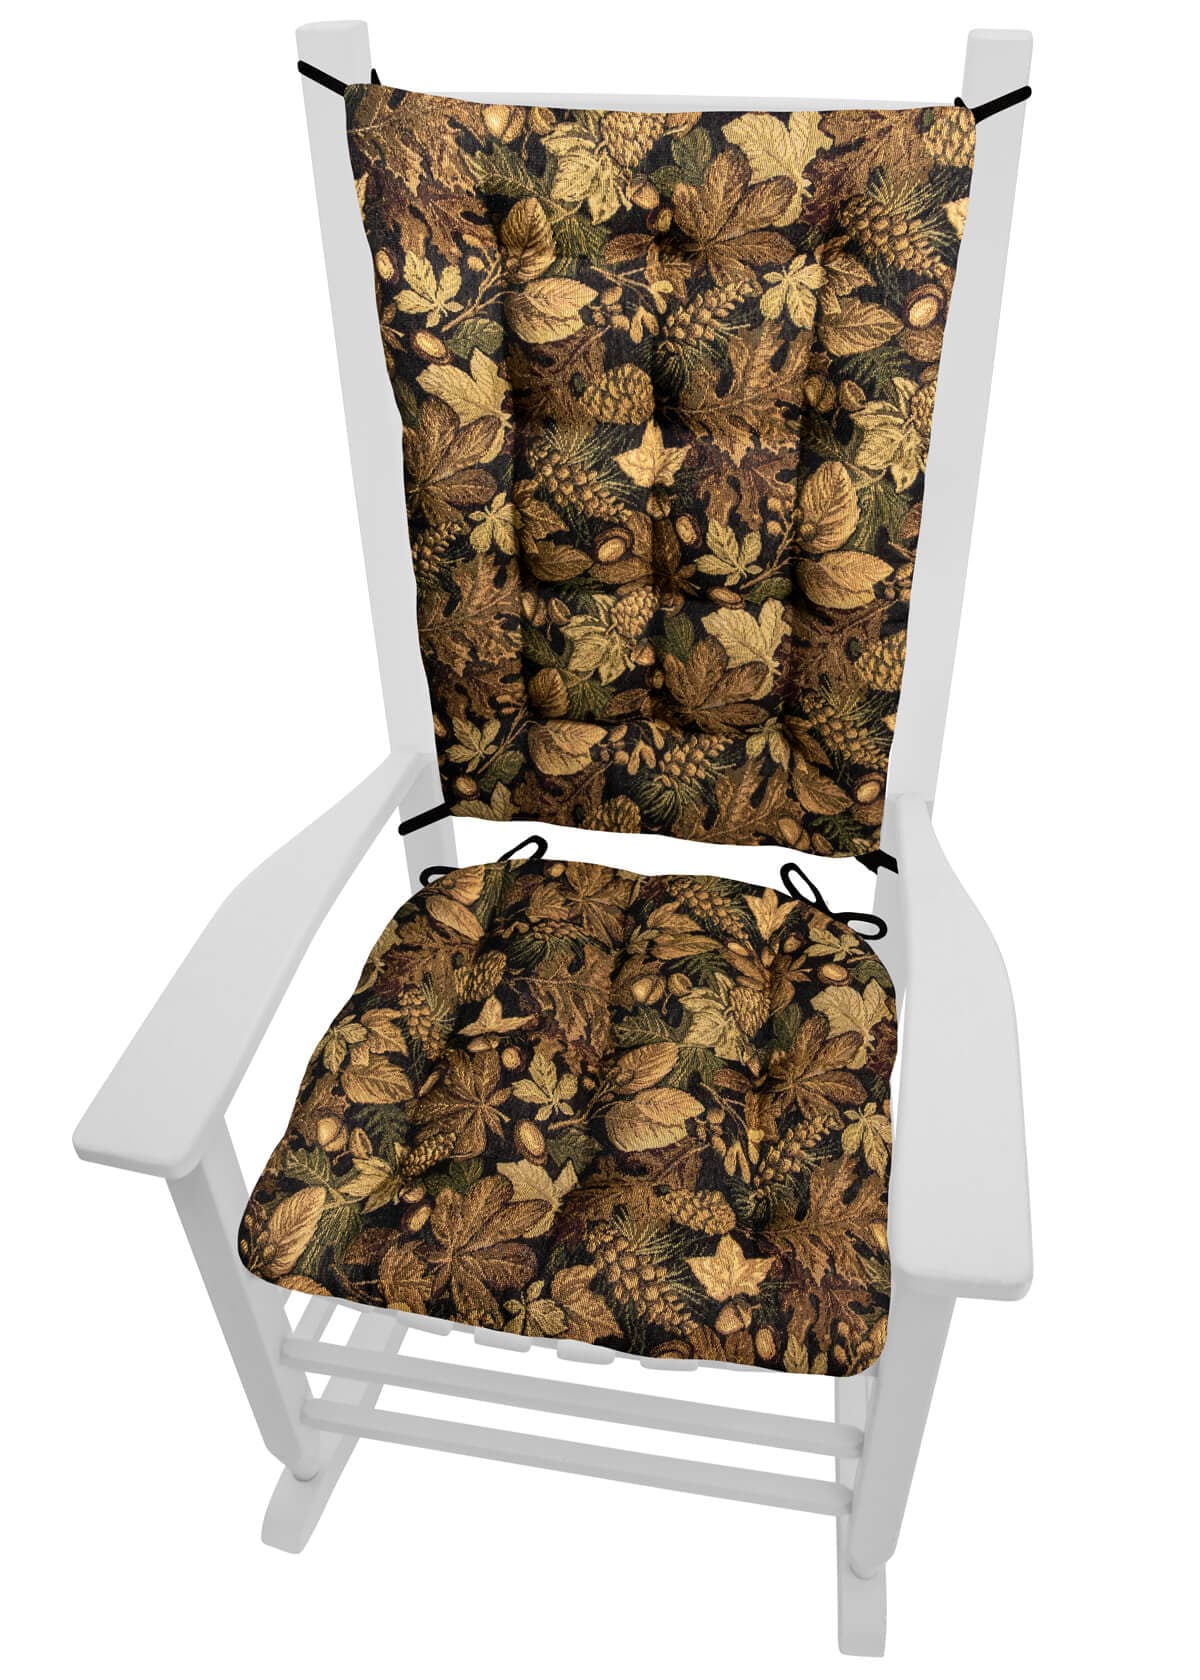 Woodlands Forest Floor Rocking Chair Cushions - Barnett Home Decor - Brown, Green, & Black